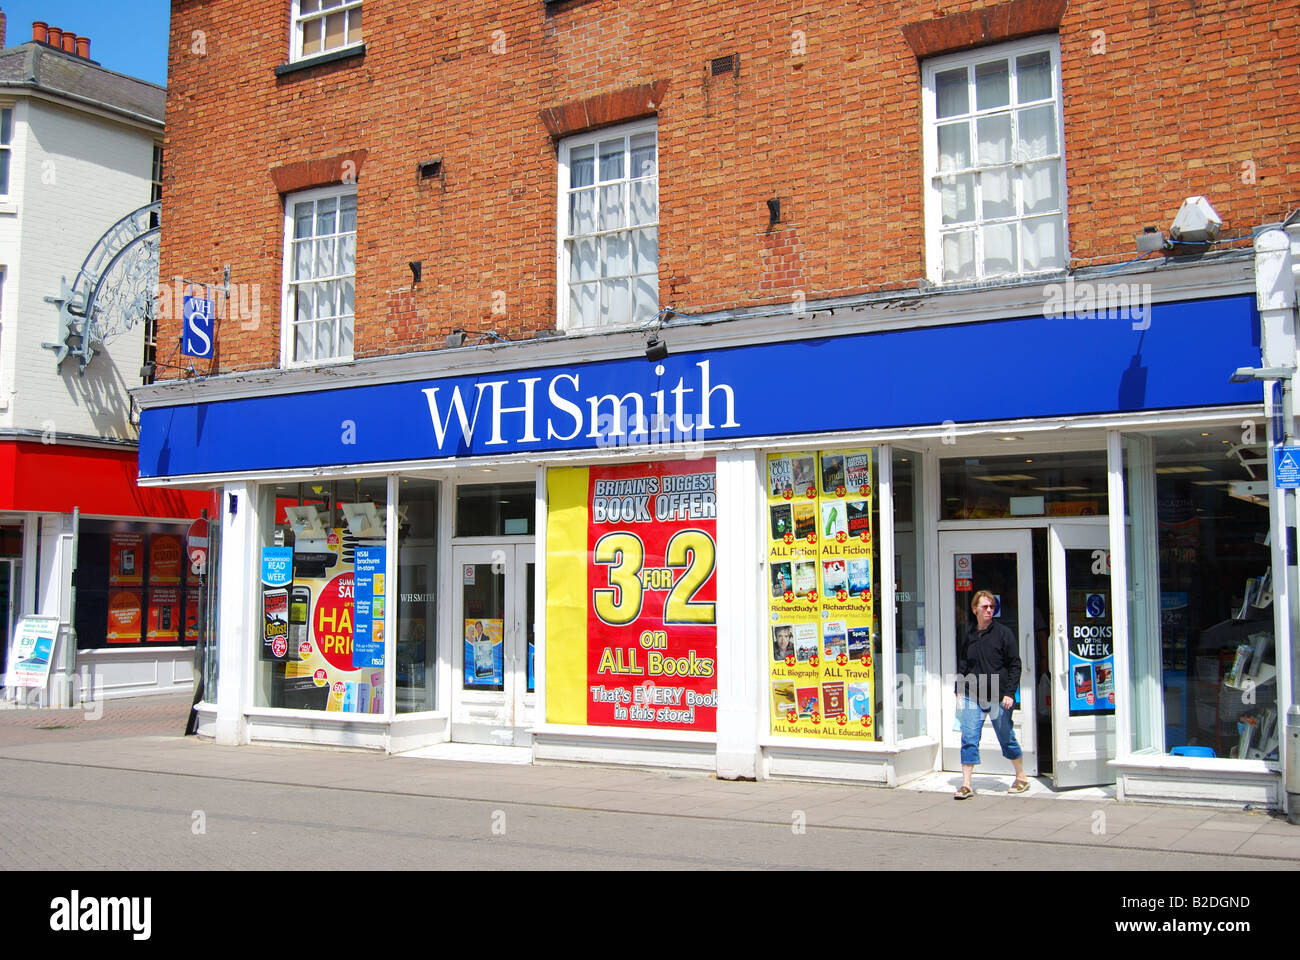 W.H.Smith store, Market Place, melton mowbray, leicestershire, England, Regno Unito Foto Stock